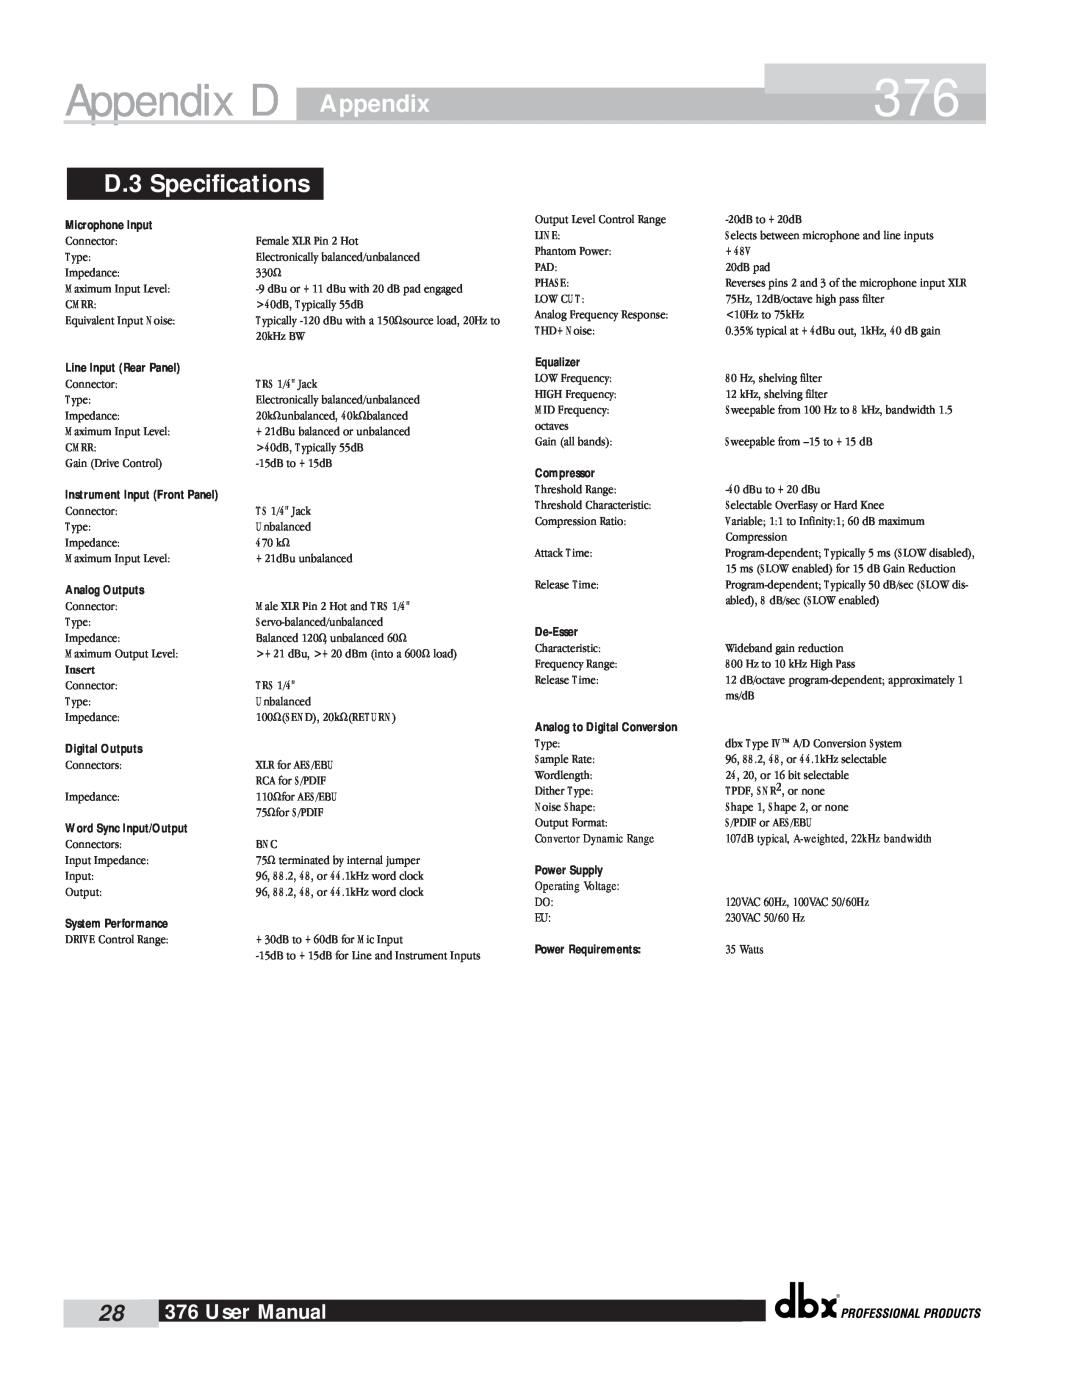 dbx Pro 376 user manual D.3 Specifications, Appendix D, Insert 